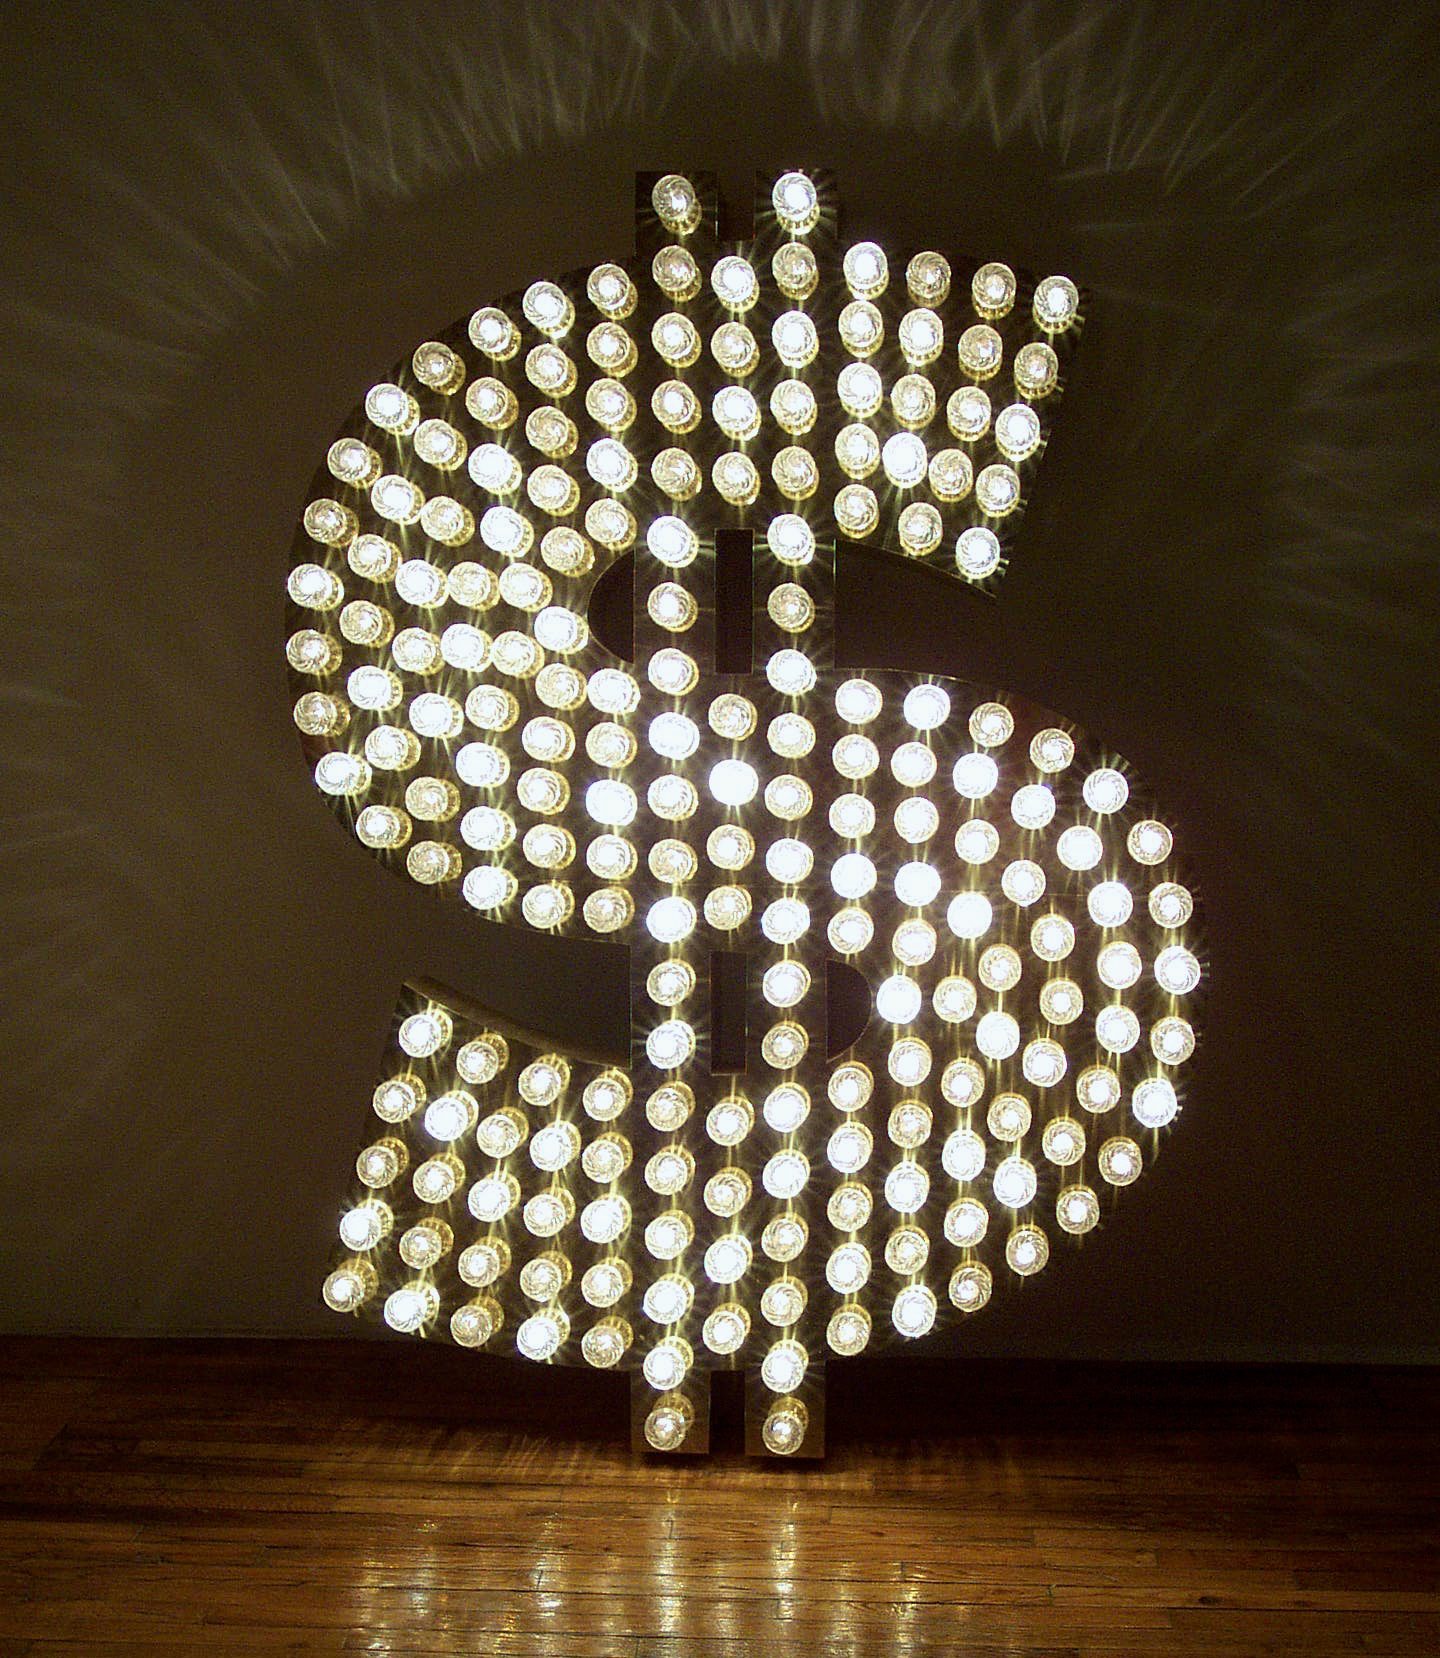 Dollar Sign made of lights